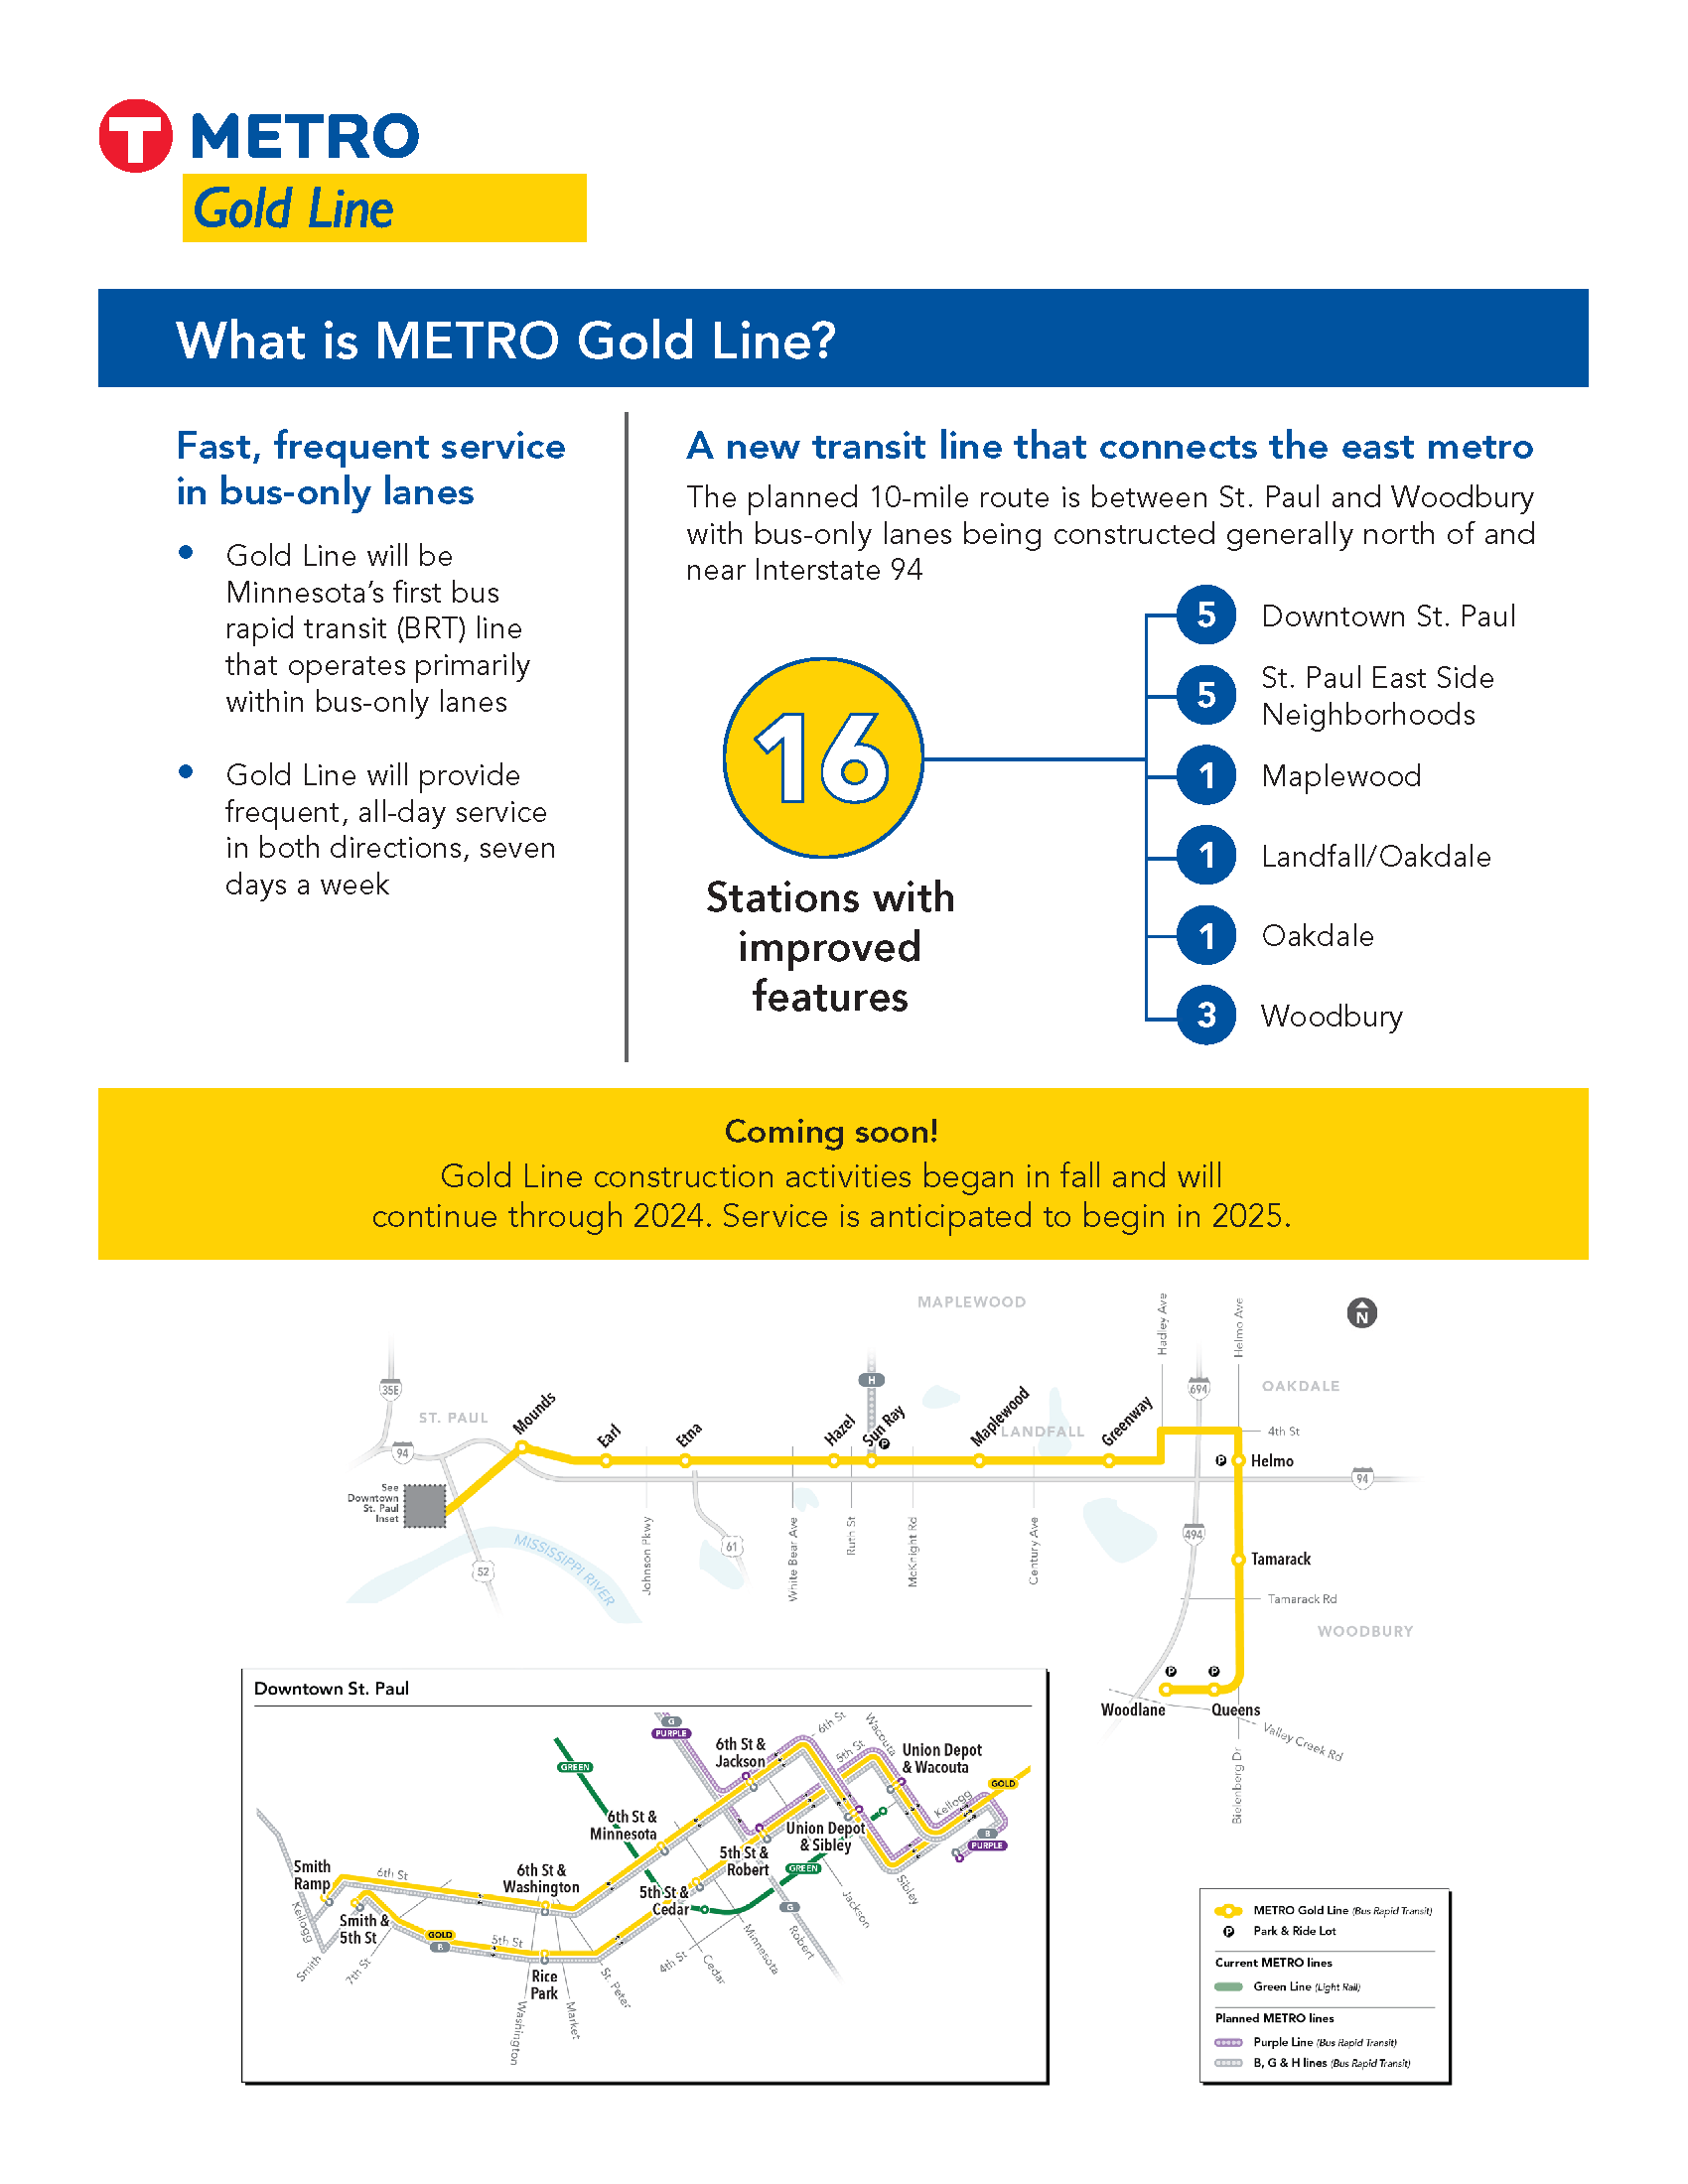 Gold Line Rapid Bus Transit